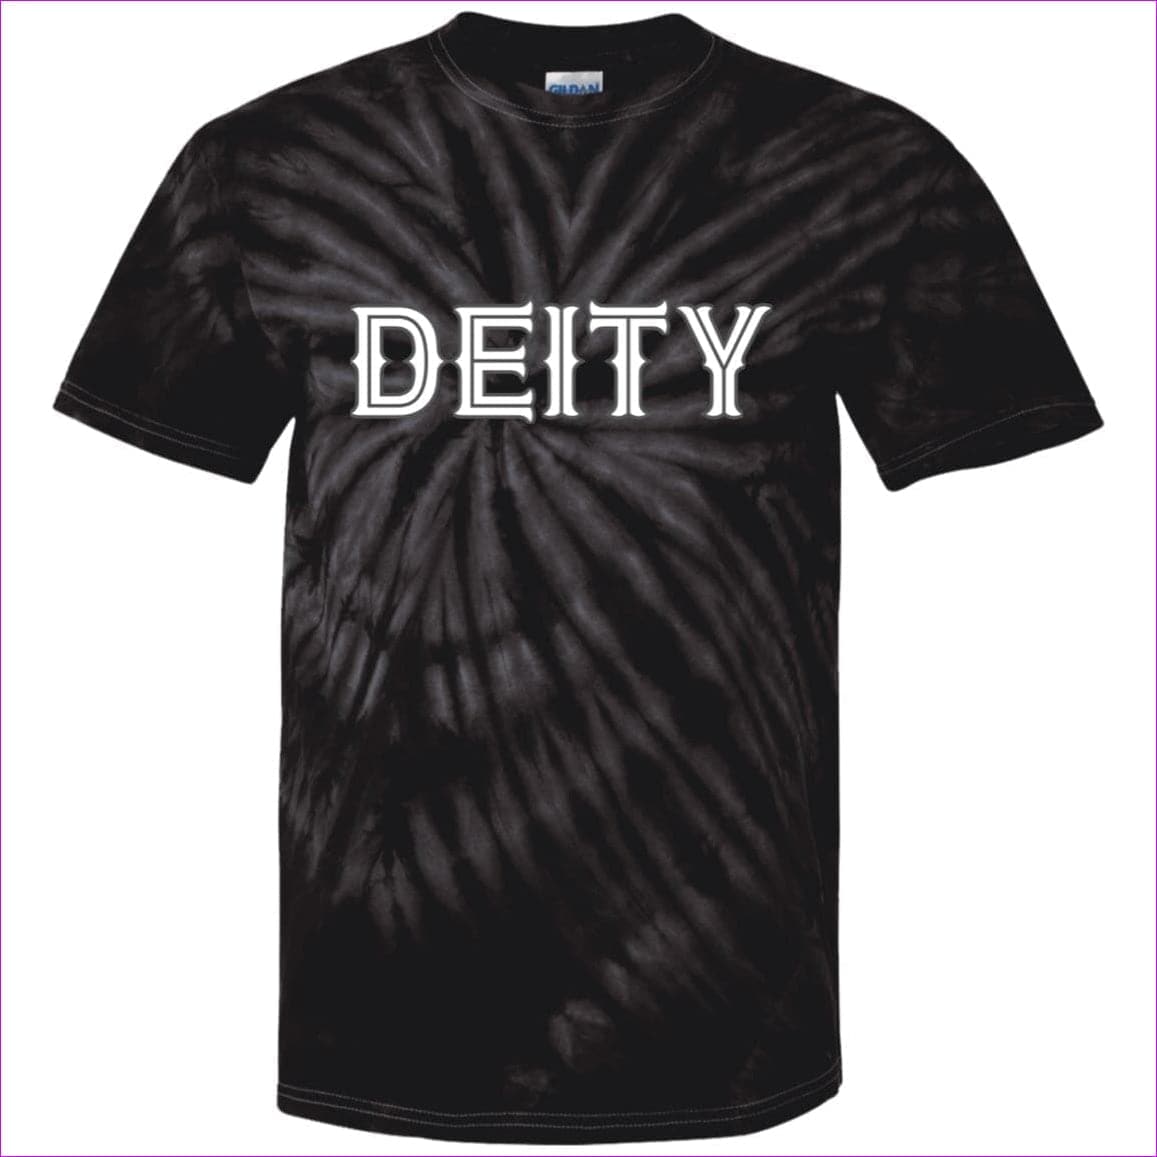 SpiderBlack - Deity 100% Cotton Men's Tie Dye T-Shirt - Mens T-Shirts at TFC&H Co.